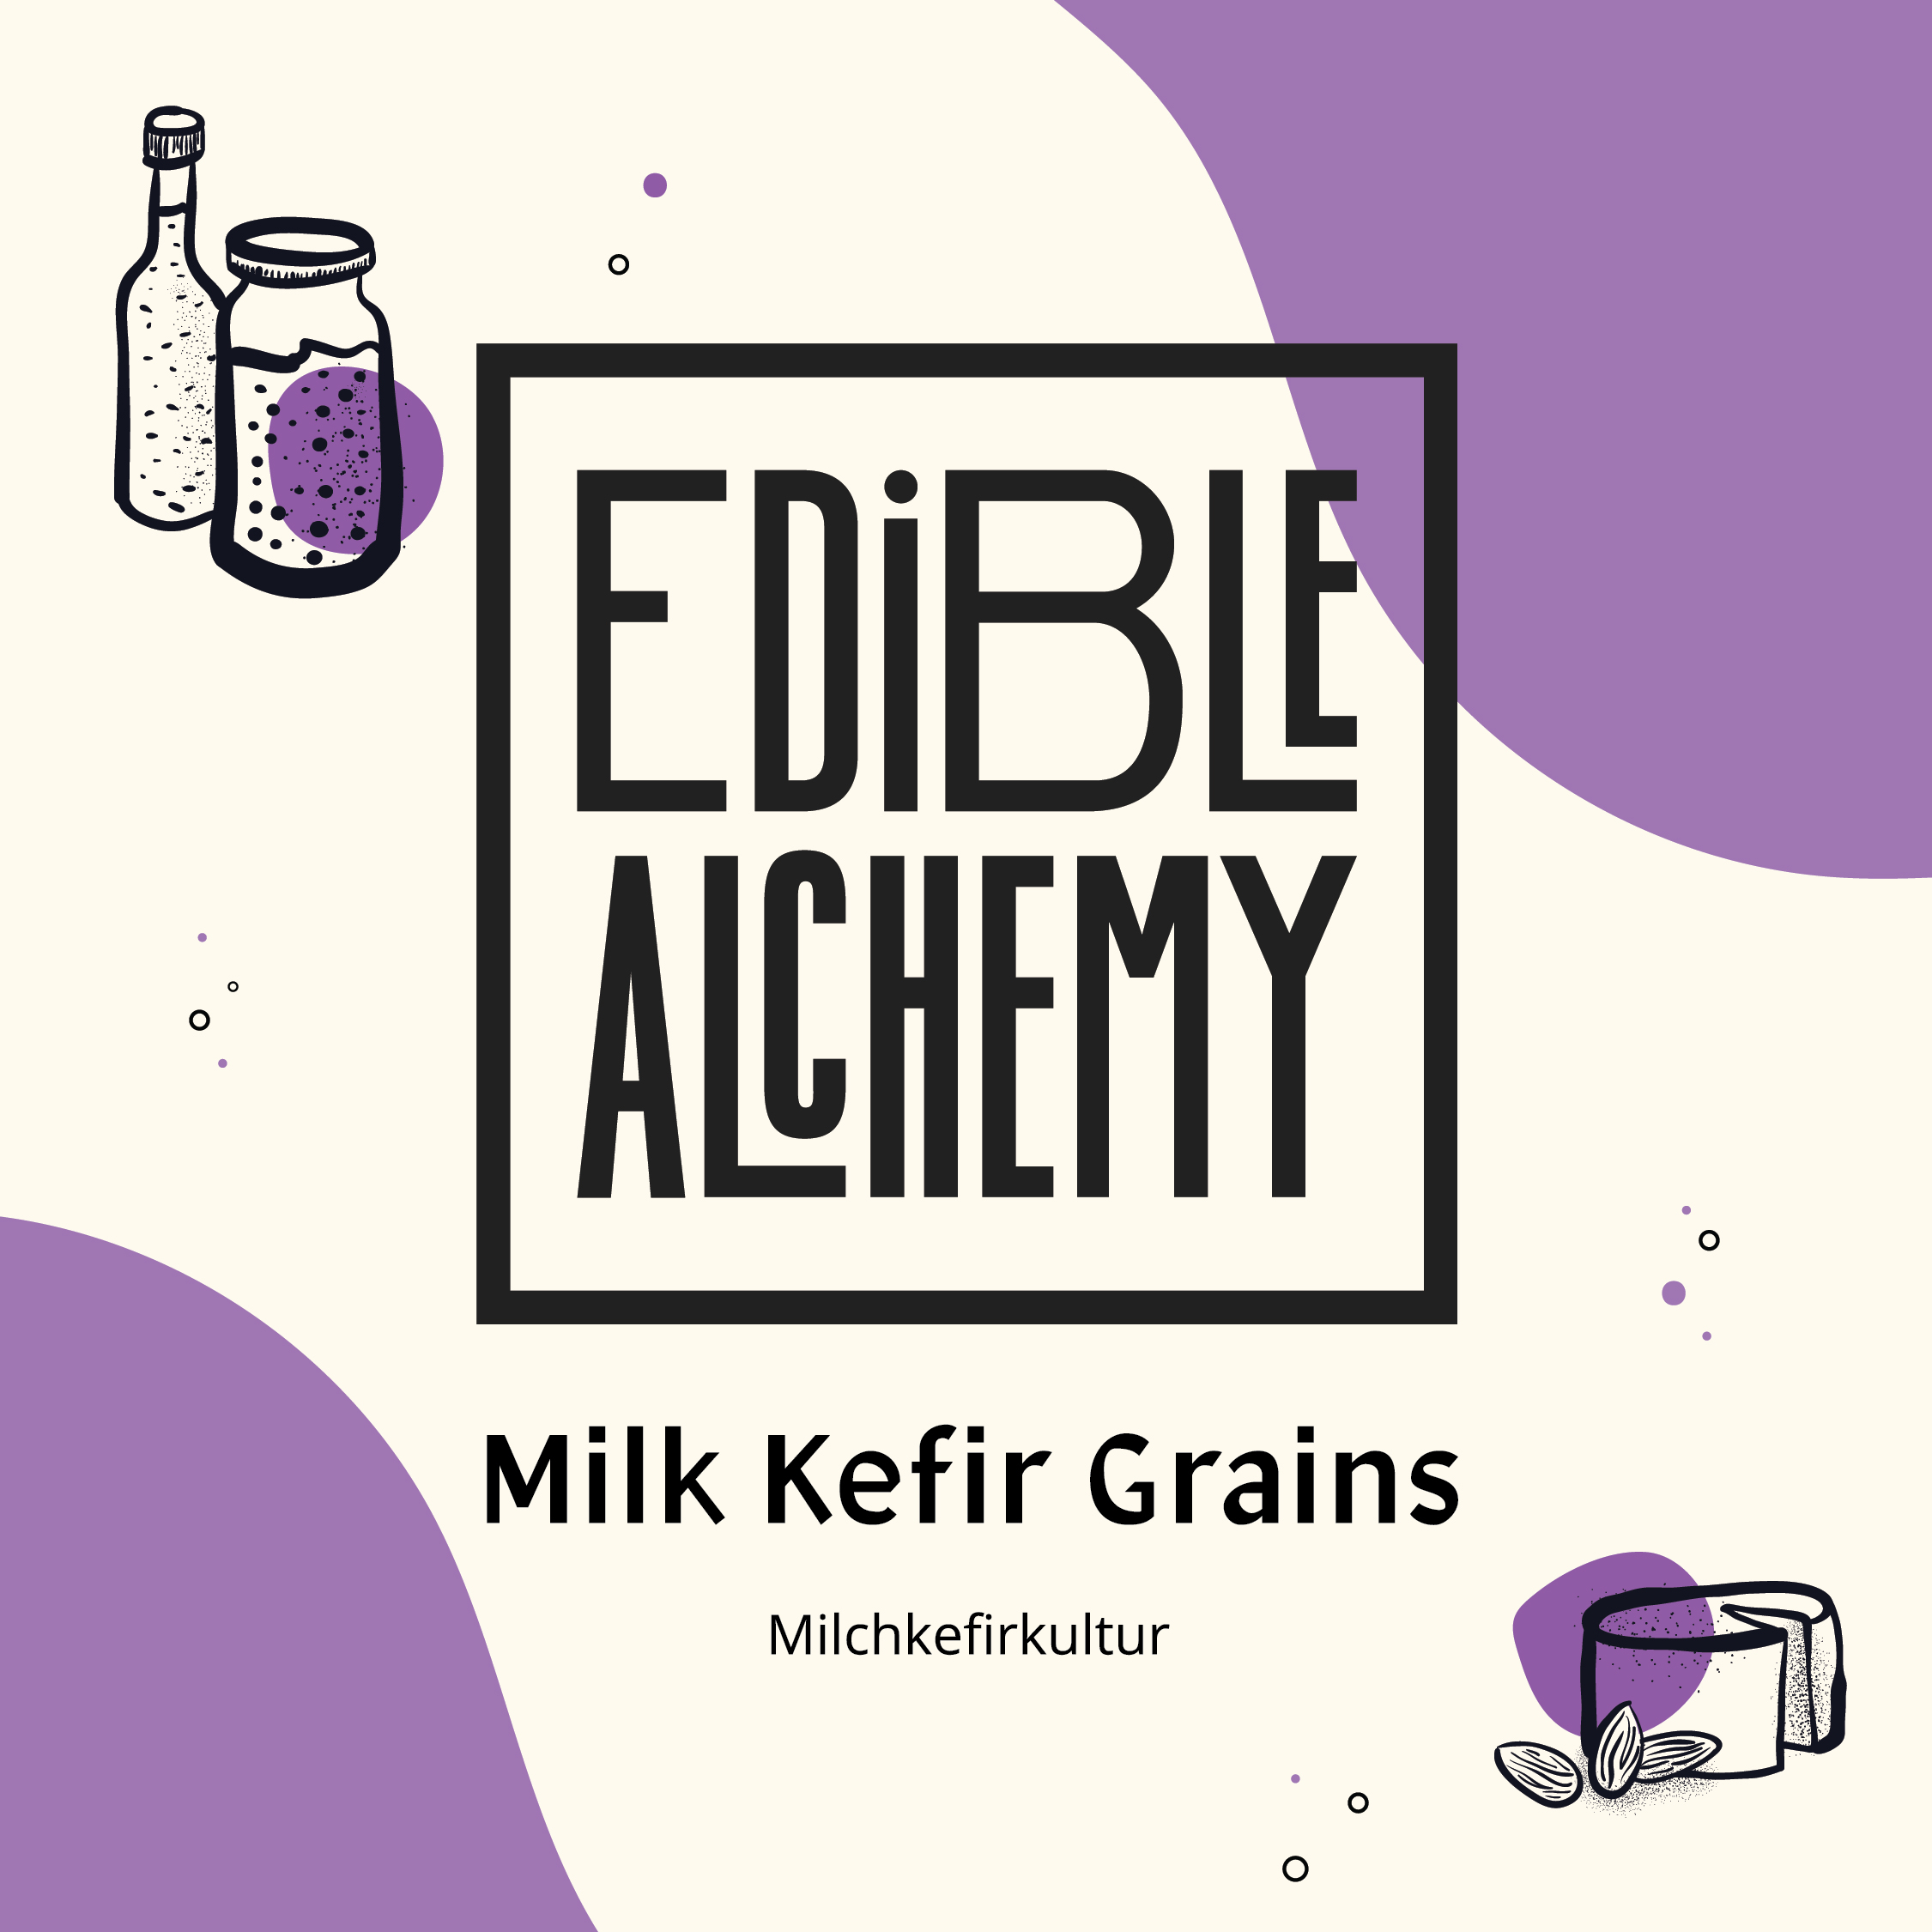 milk kefir grains